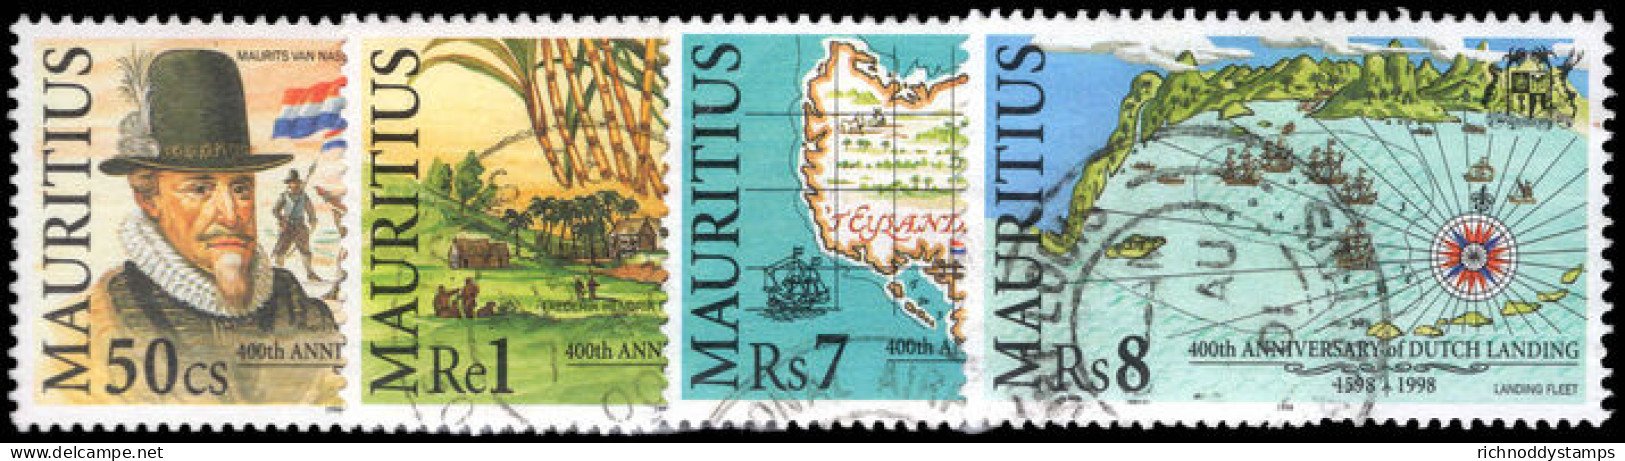 Mauritius 1998 40th Anniv Of Dutch Landing On Mauritius Fine Used. - Mauritius (1968-...)